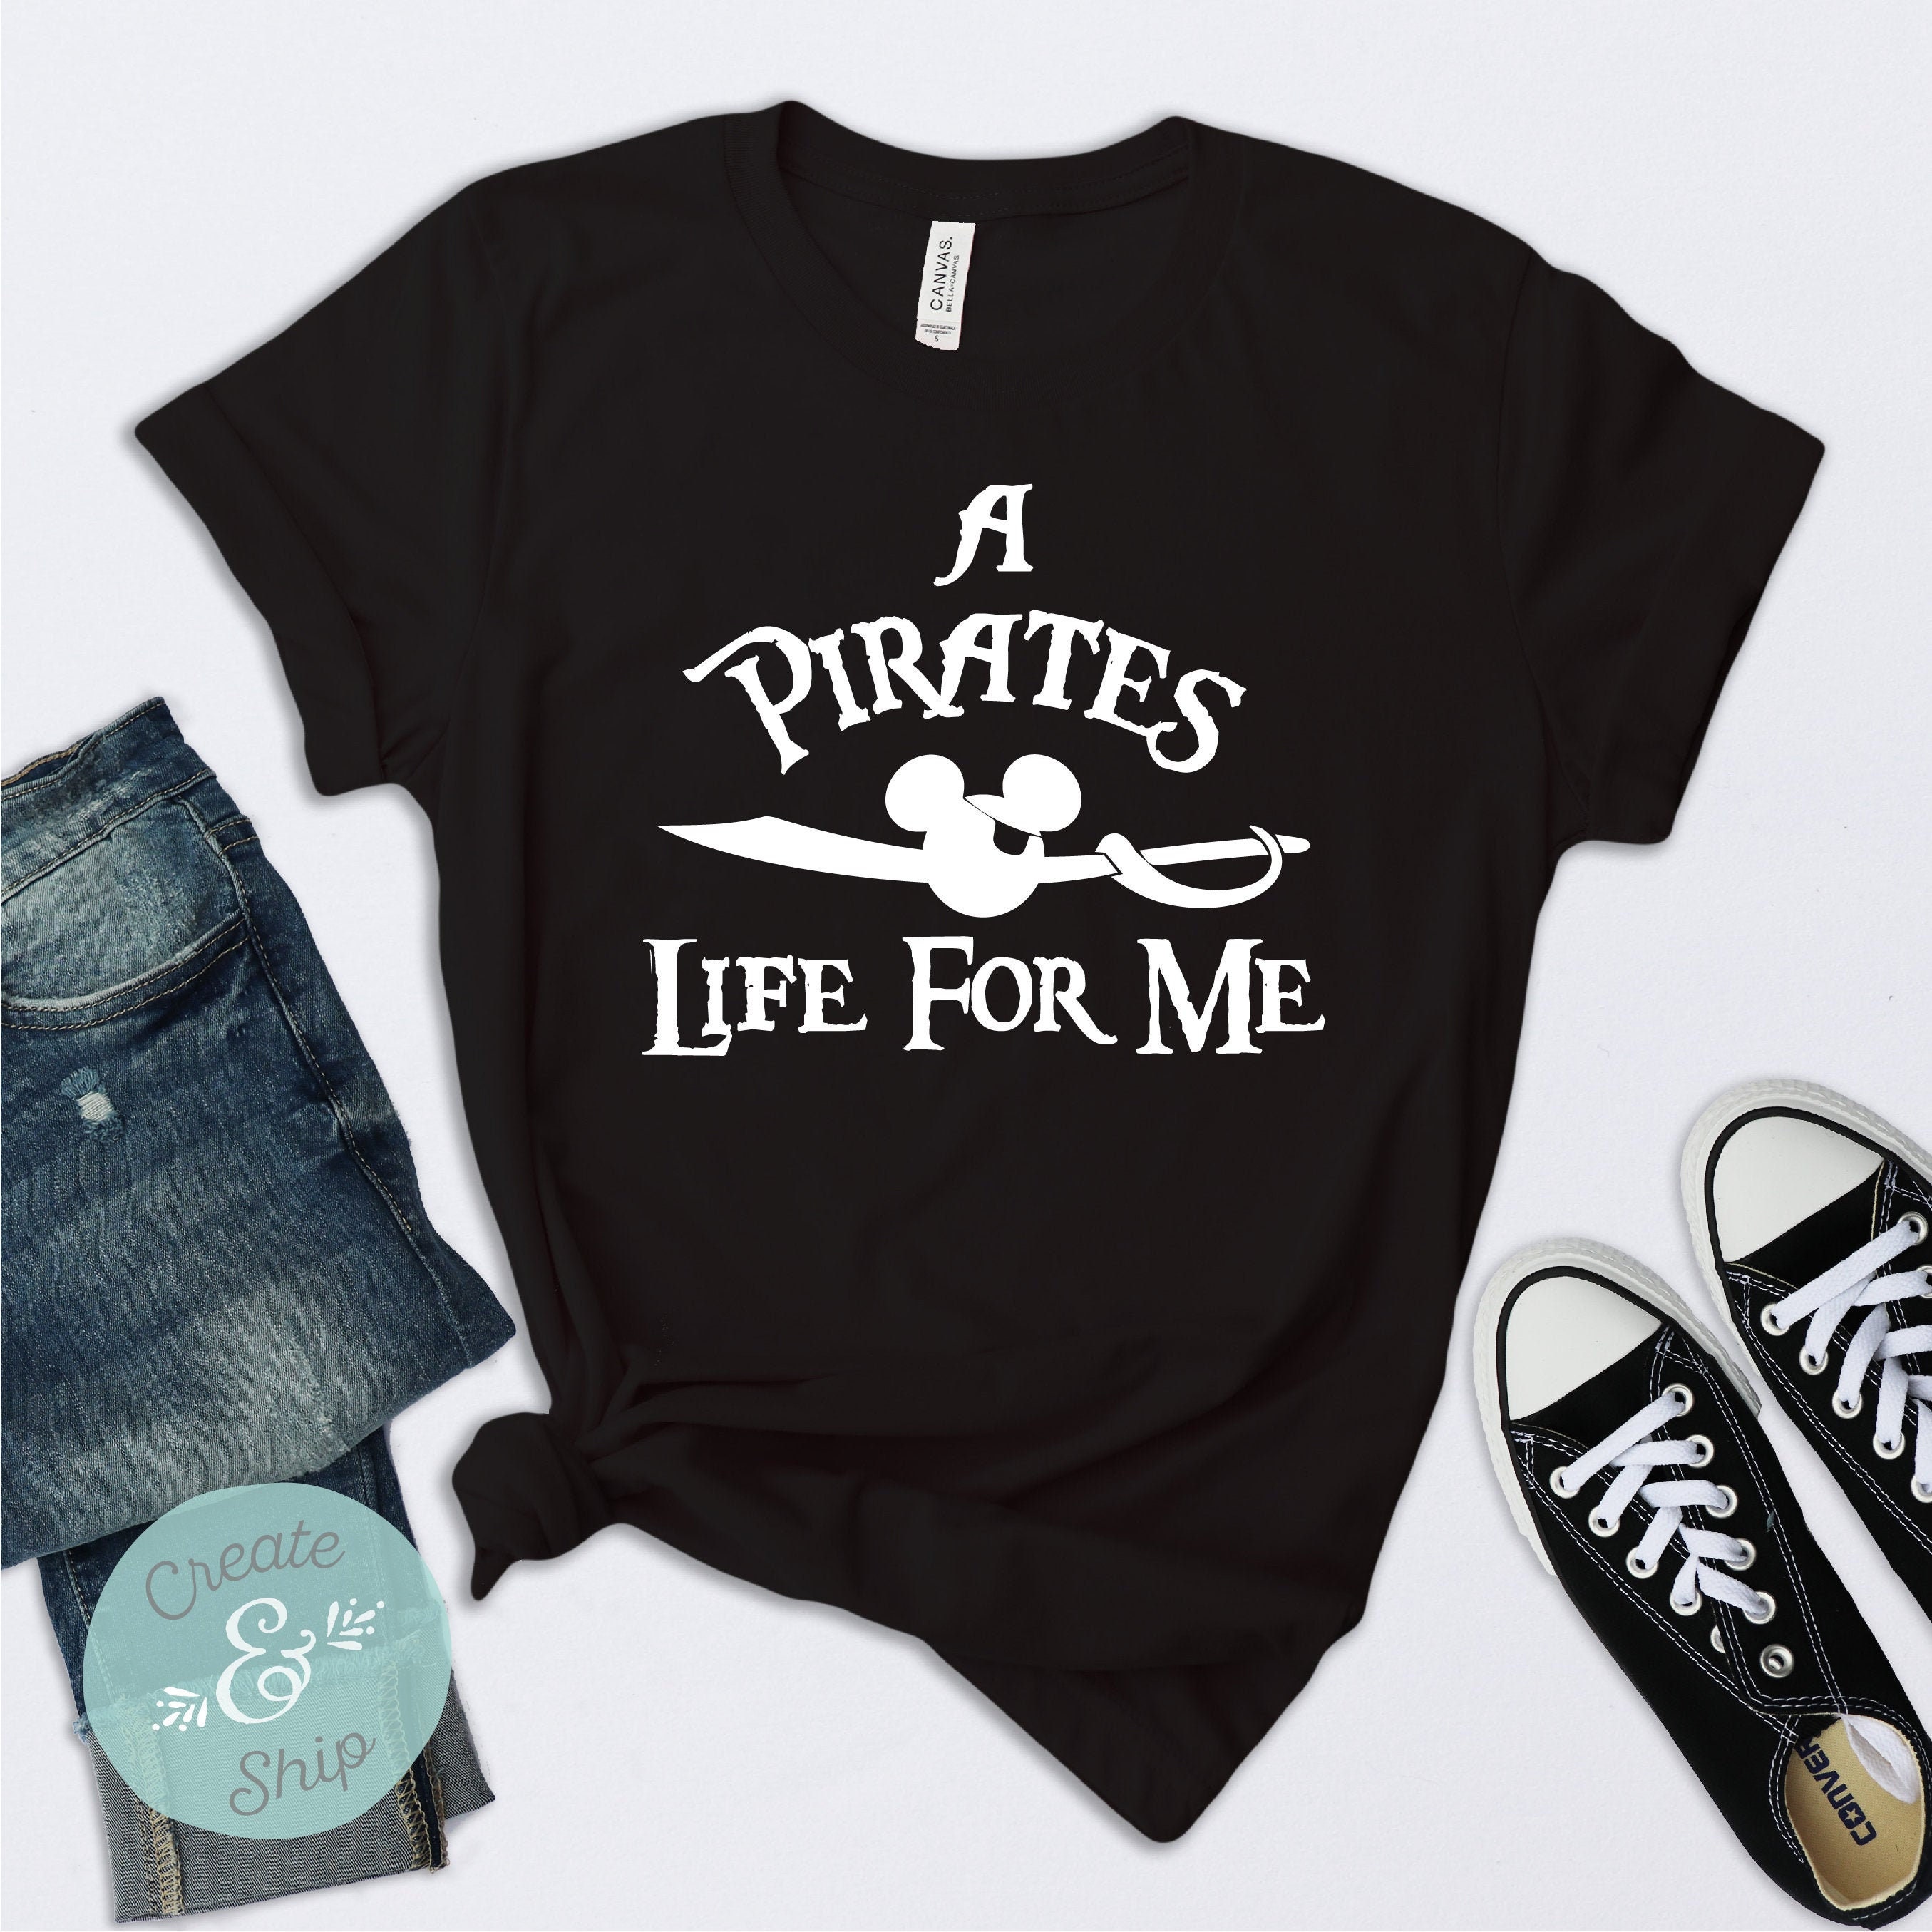 Discover A Pirates Life For Me Shirt, Disneyland Shirt, Pirates Of The Caribbean Shirt, Kids Disney Shirt, Disney Shirts